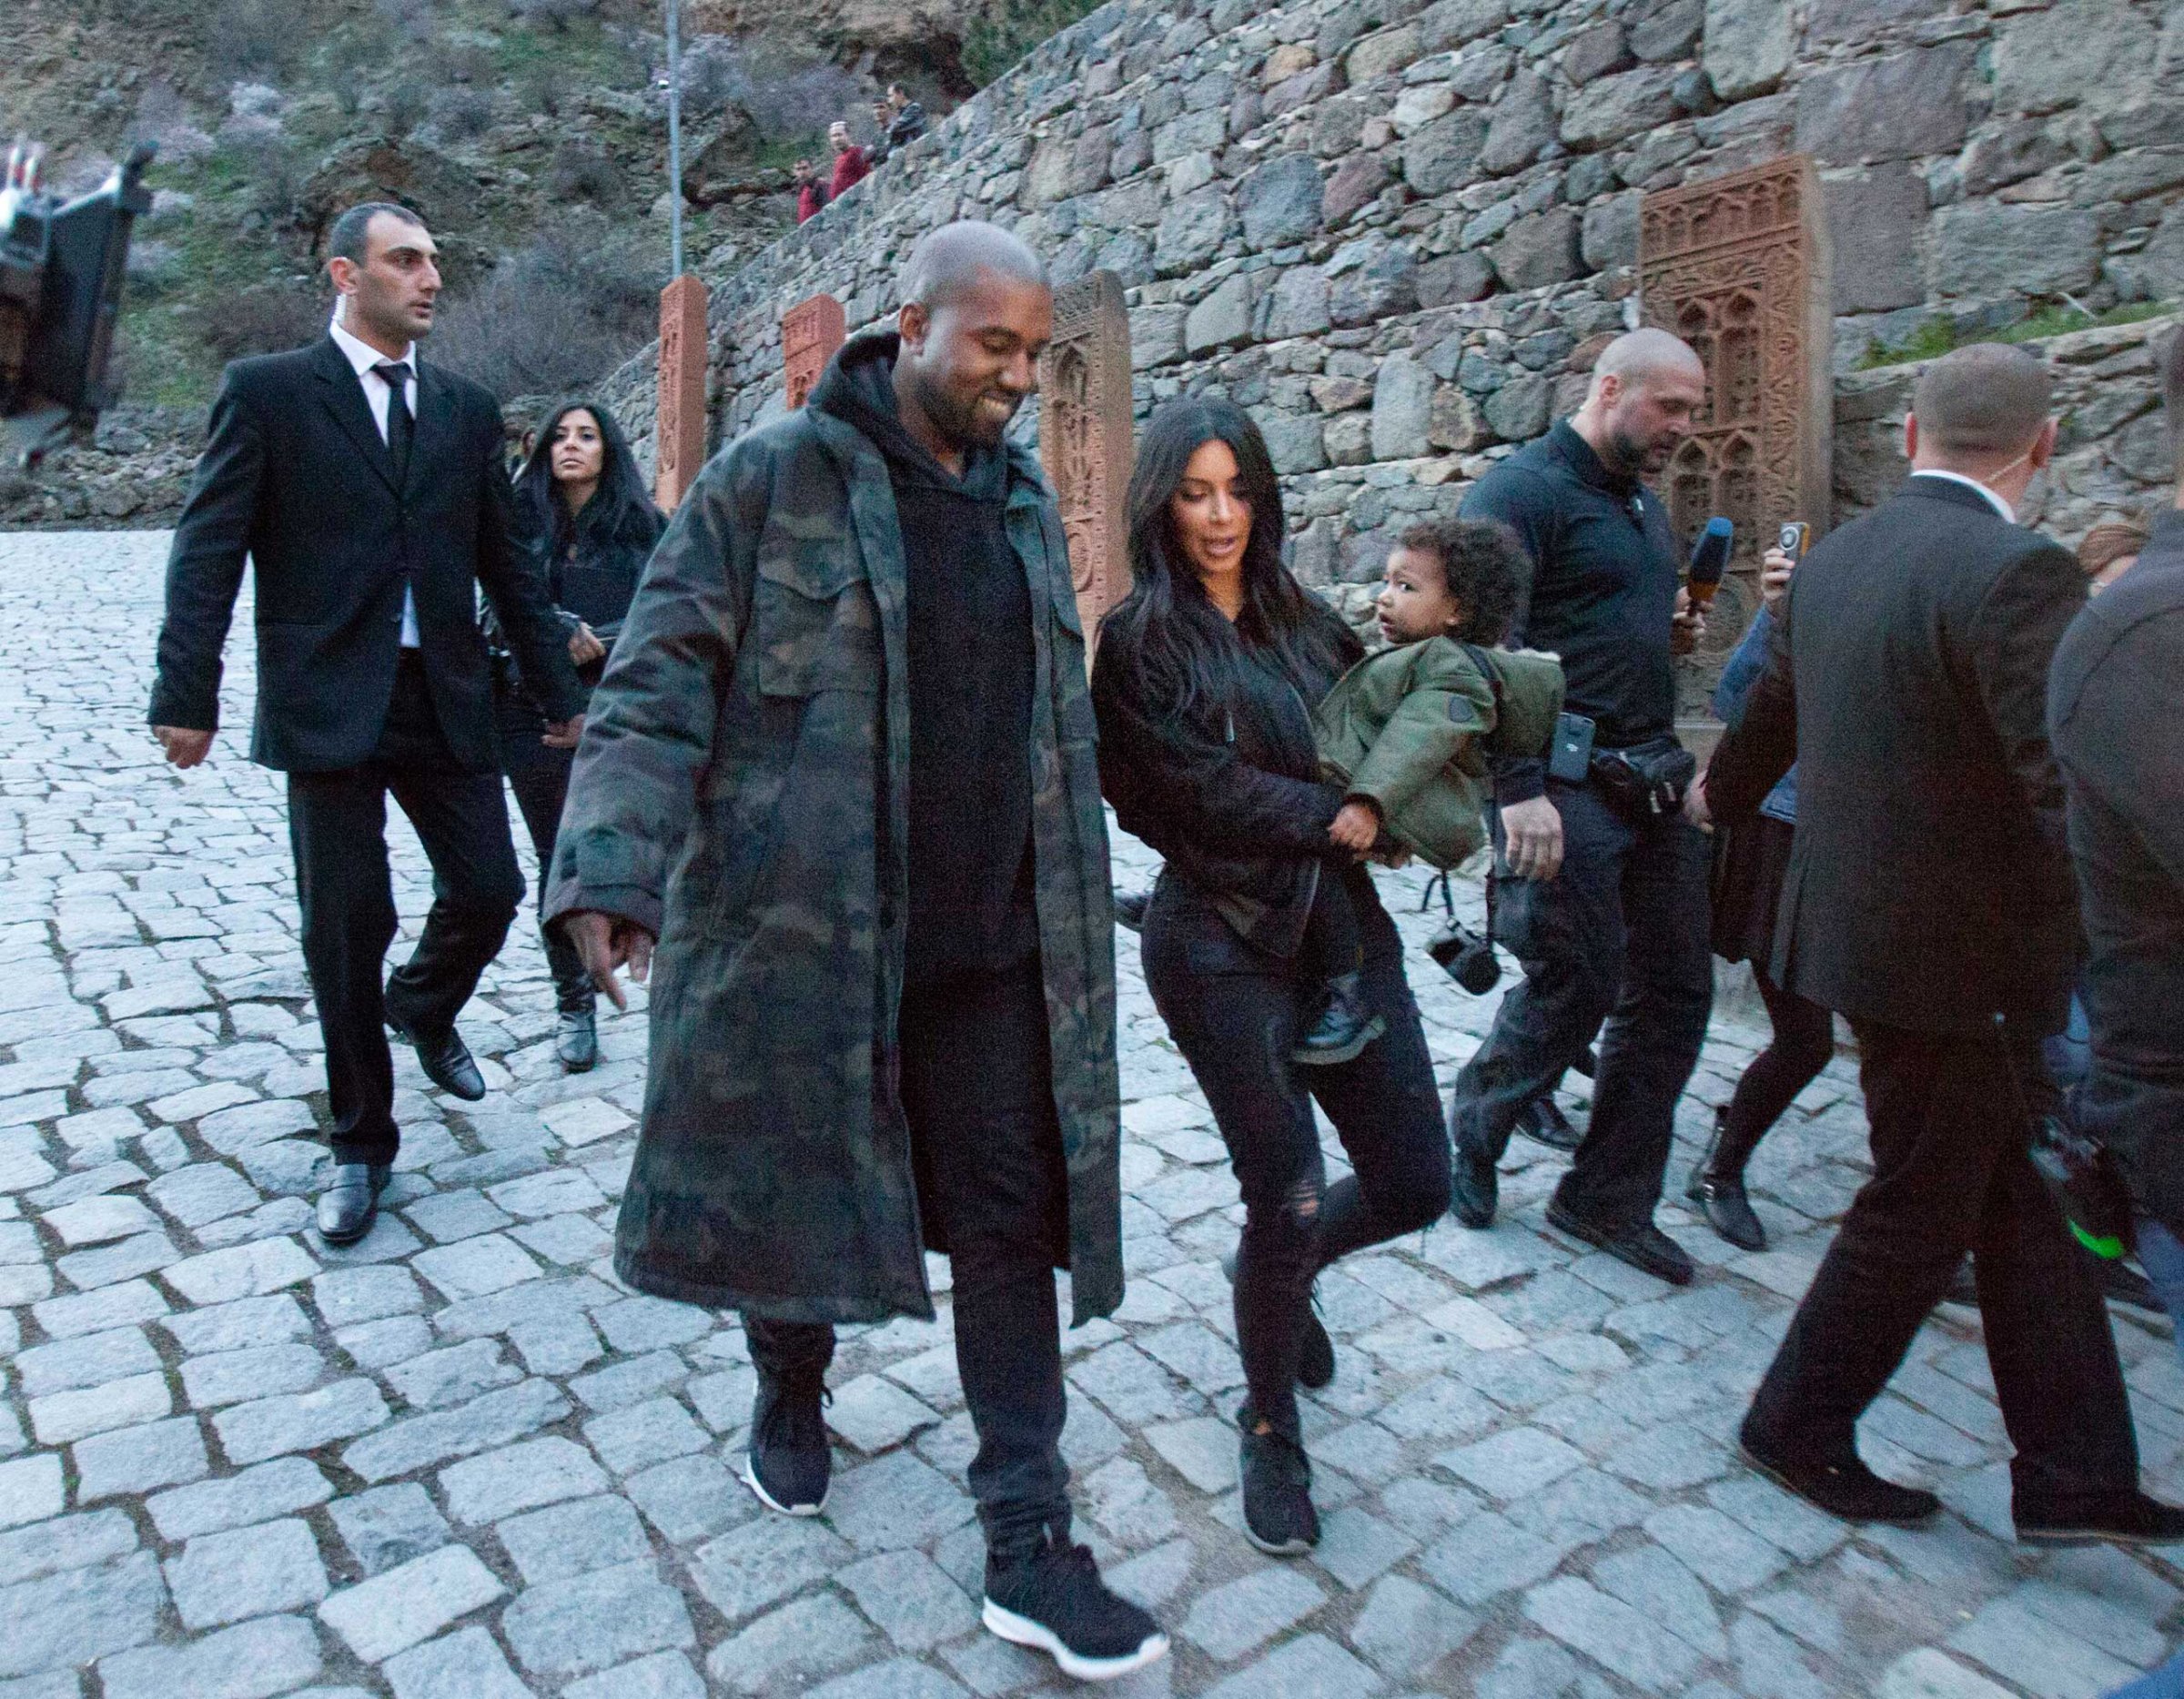 U.S. TV personality Kim Kardashian, center, carriers daughter North as she walks alongside her husband Kanye West visit the Geghard Monastery near Goght, Armenia, April 9, 2015.